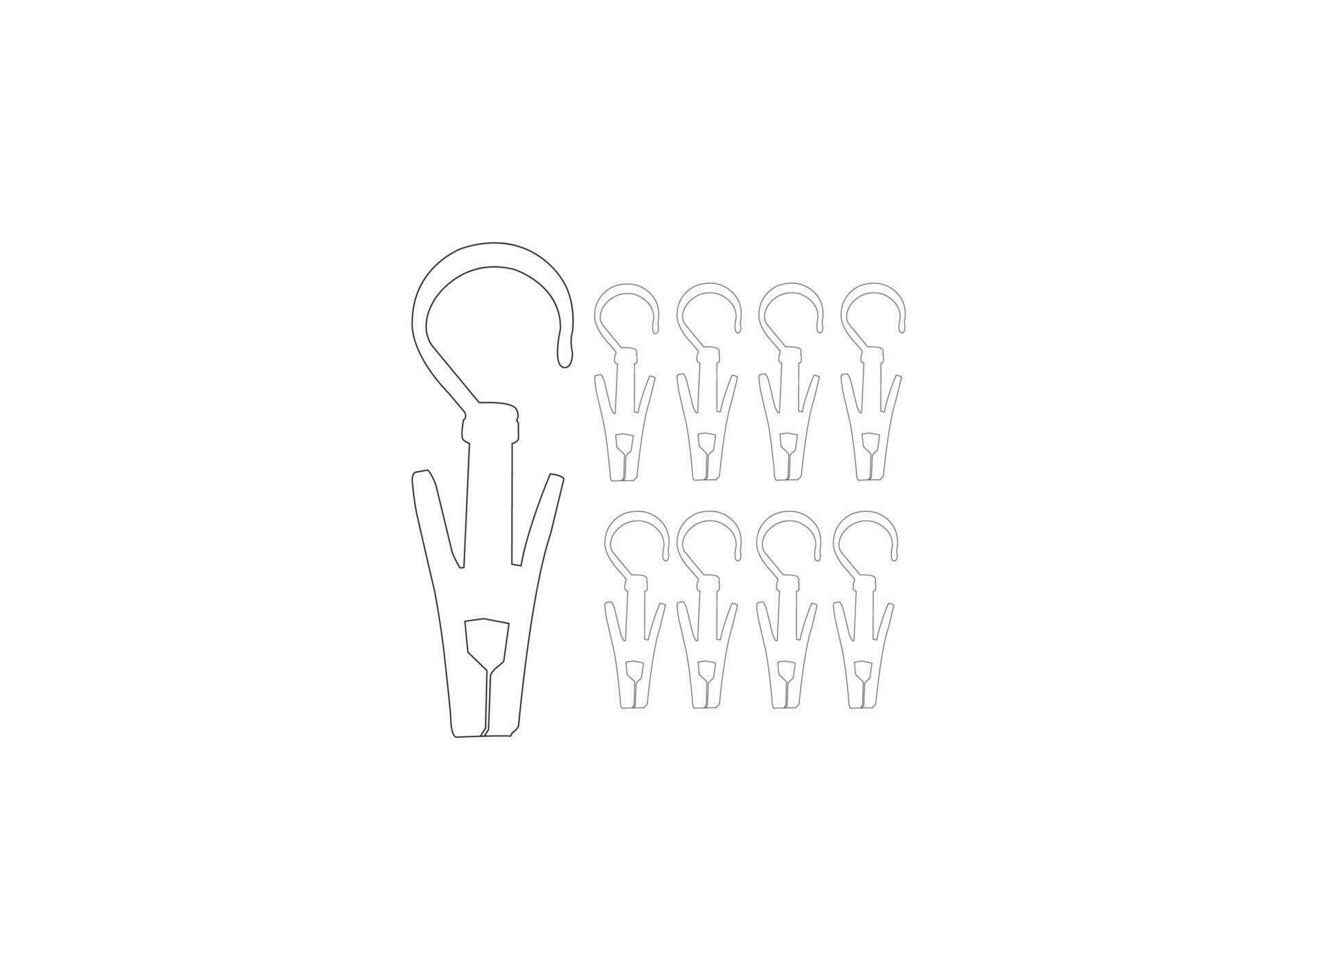 hanger clips vector design and illustration. hanger clips vector art, icons, and vector images. hanger clips vector design and outline.